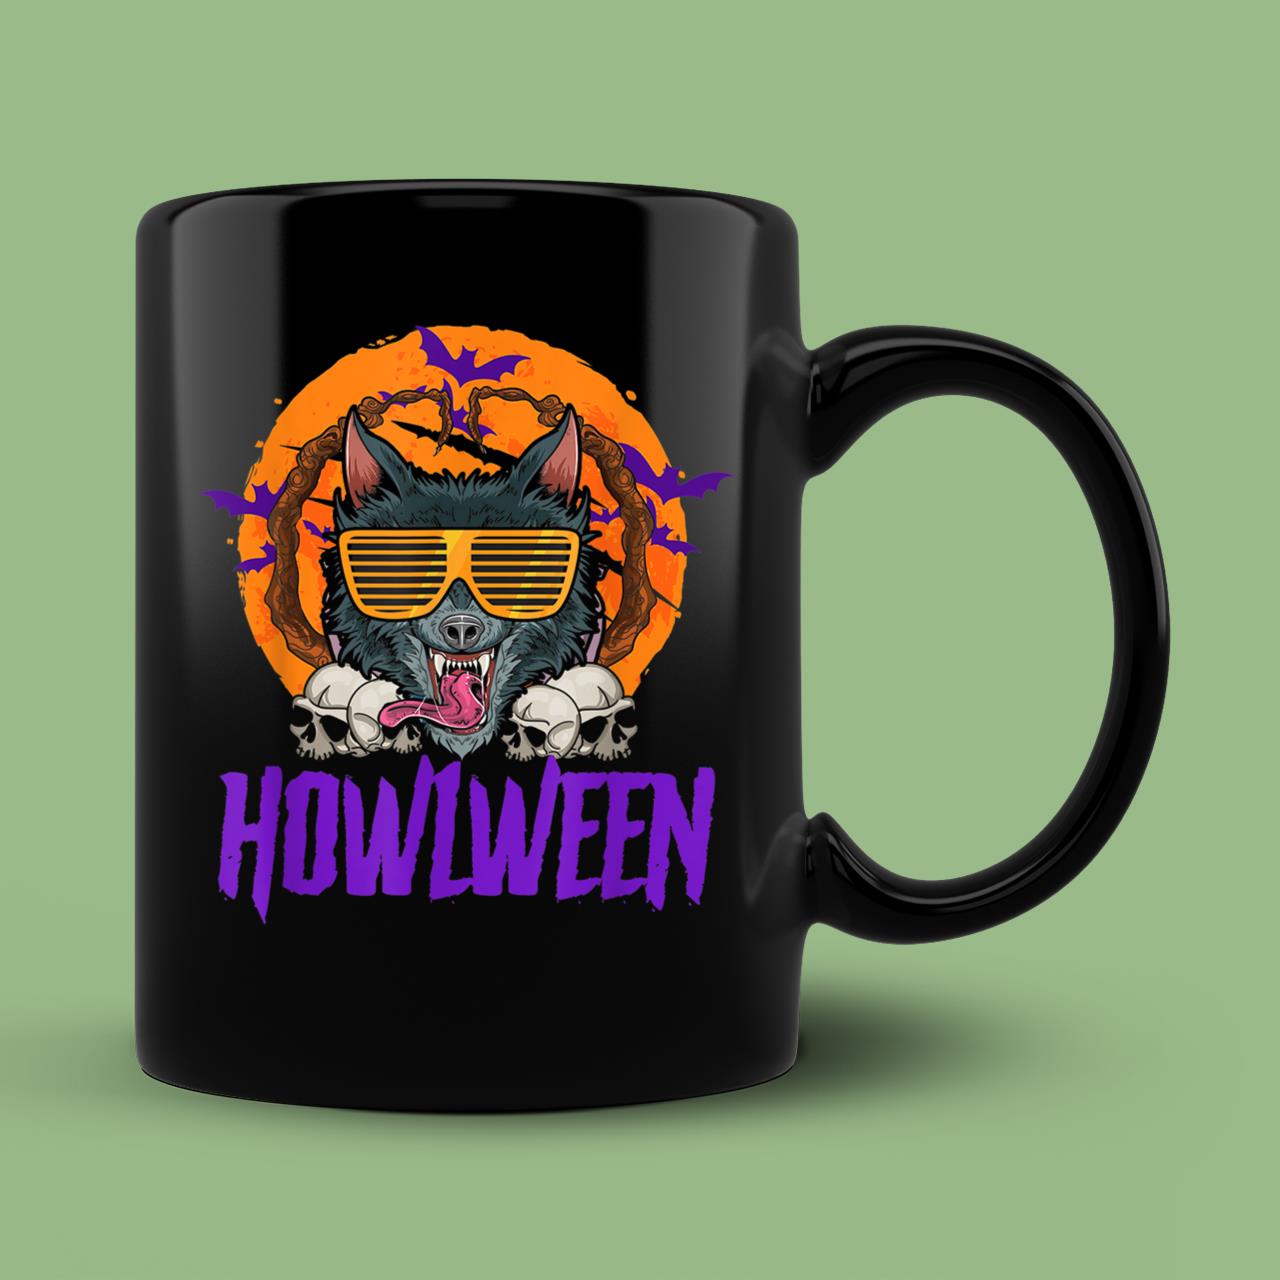 Skitongift Ceramic Novelty Coffee Mug Wolf Costume Howlween Spooky Halloween Mug